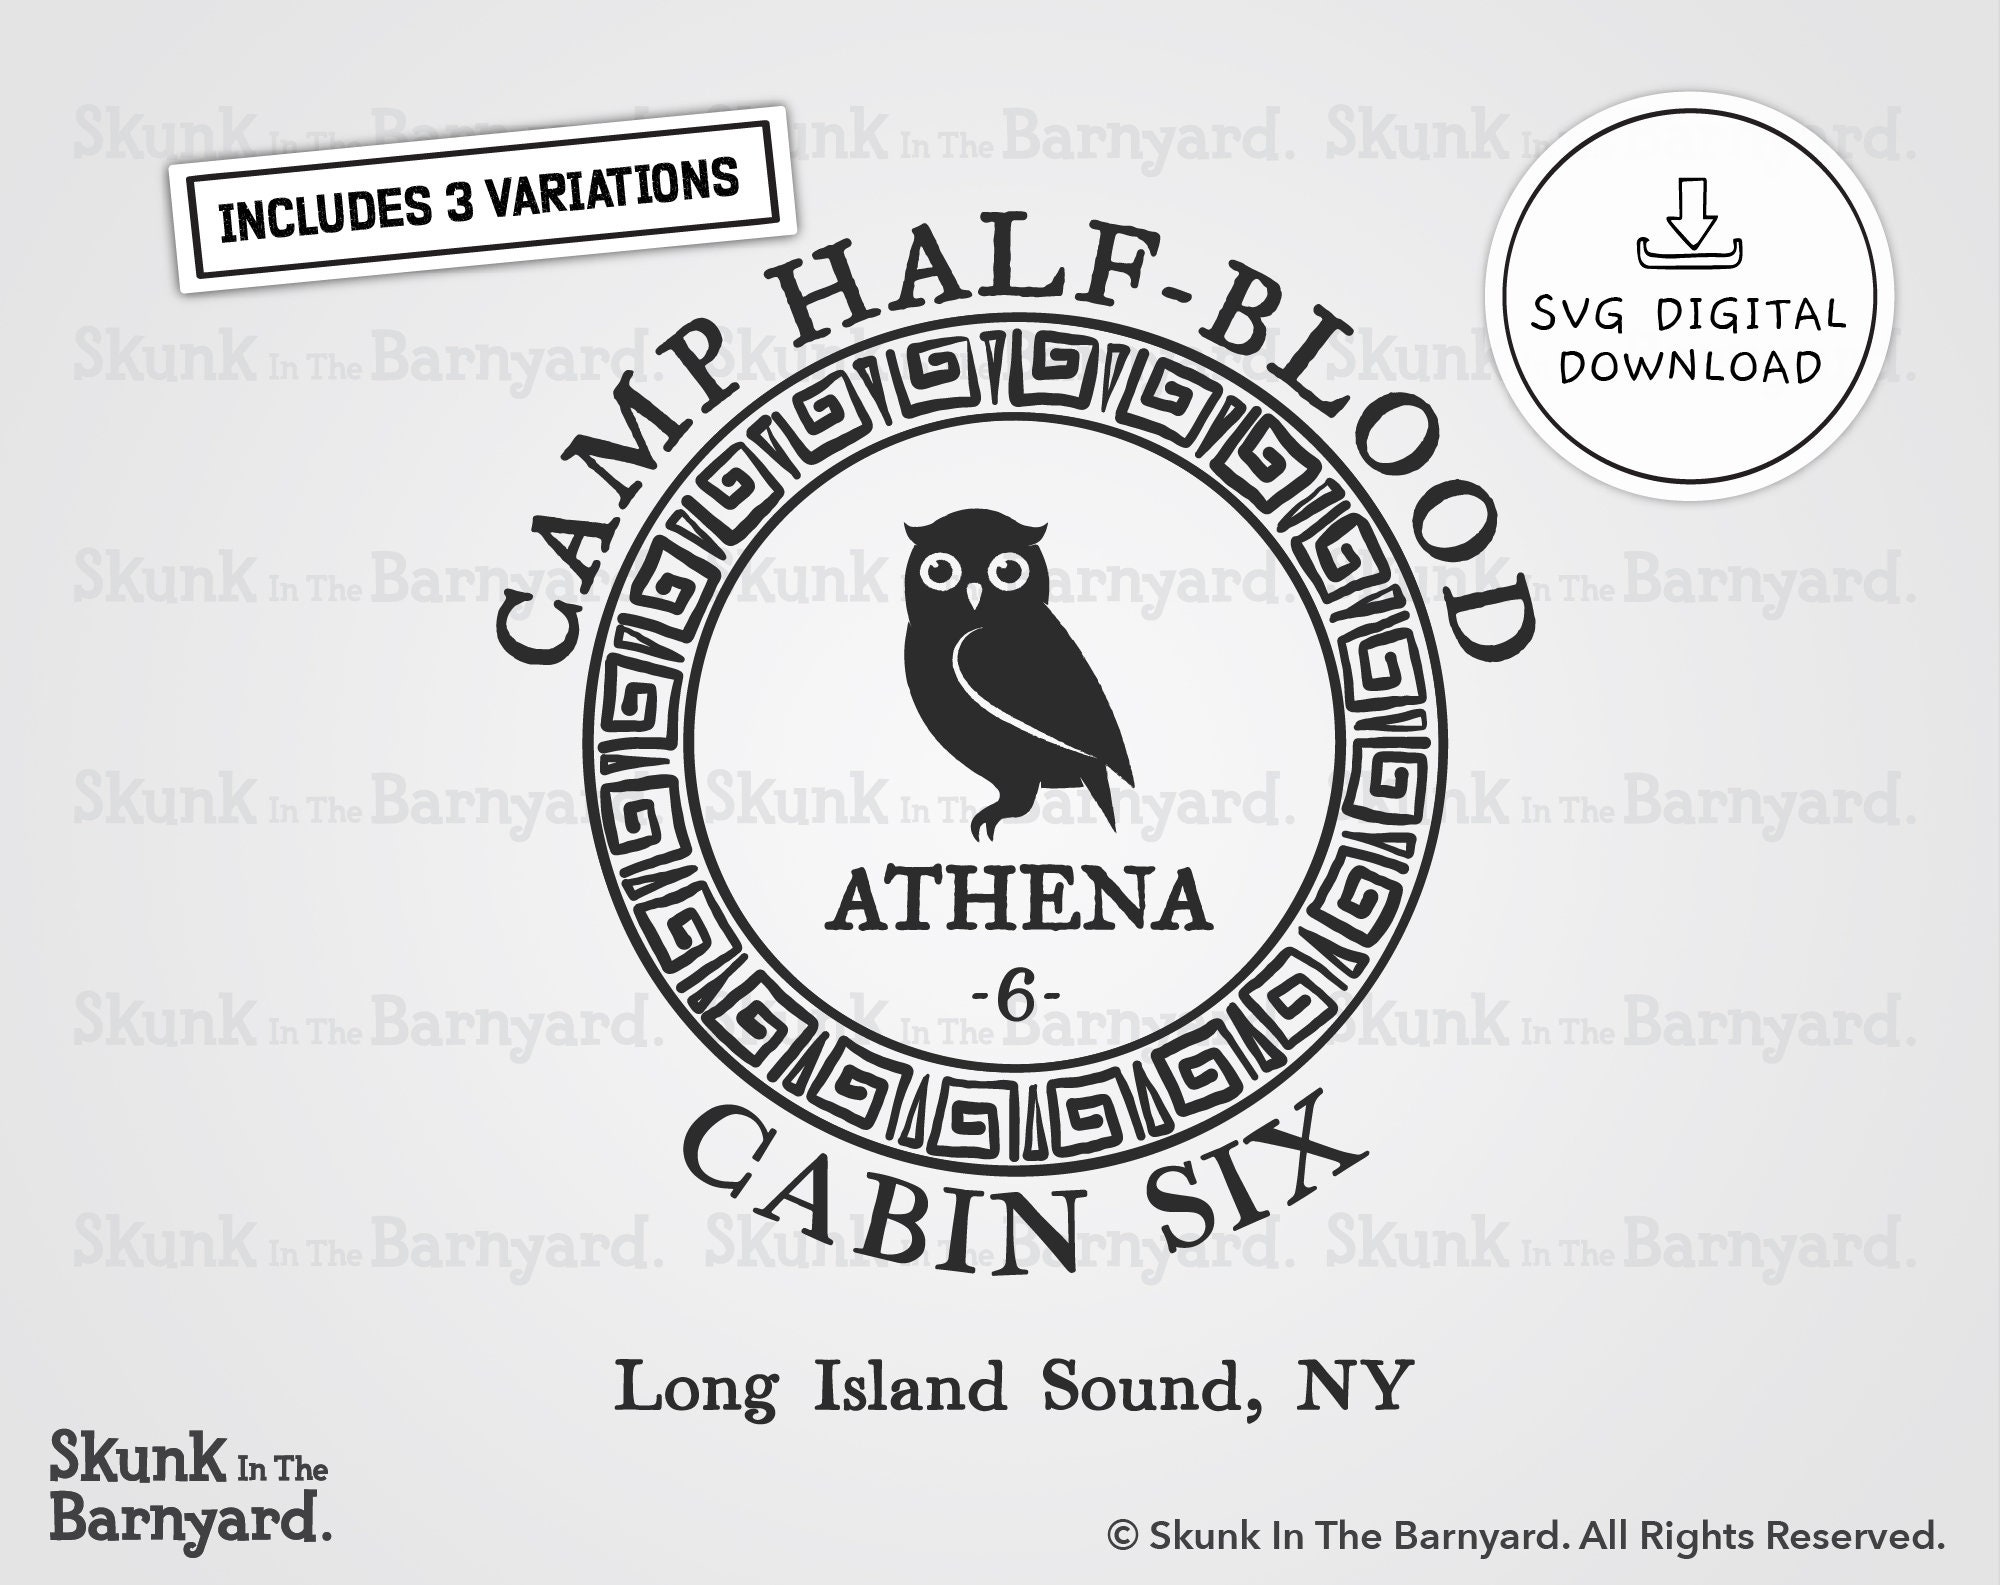 Shop Premium Camp Half Blood Cabin 6 Athena T-Shirt - Davson Sales